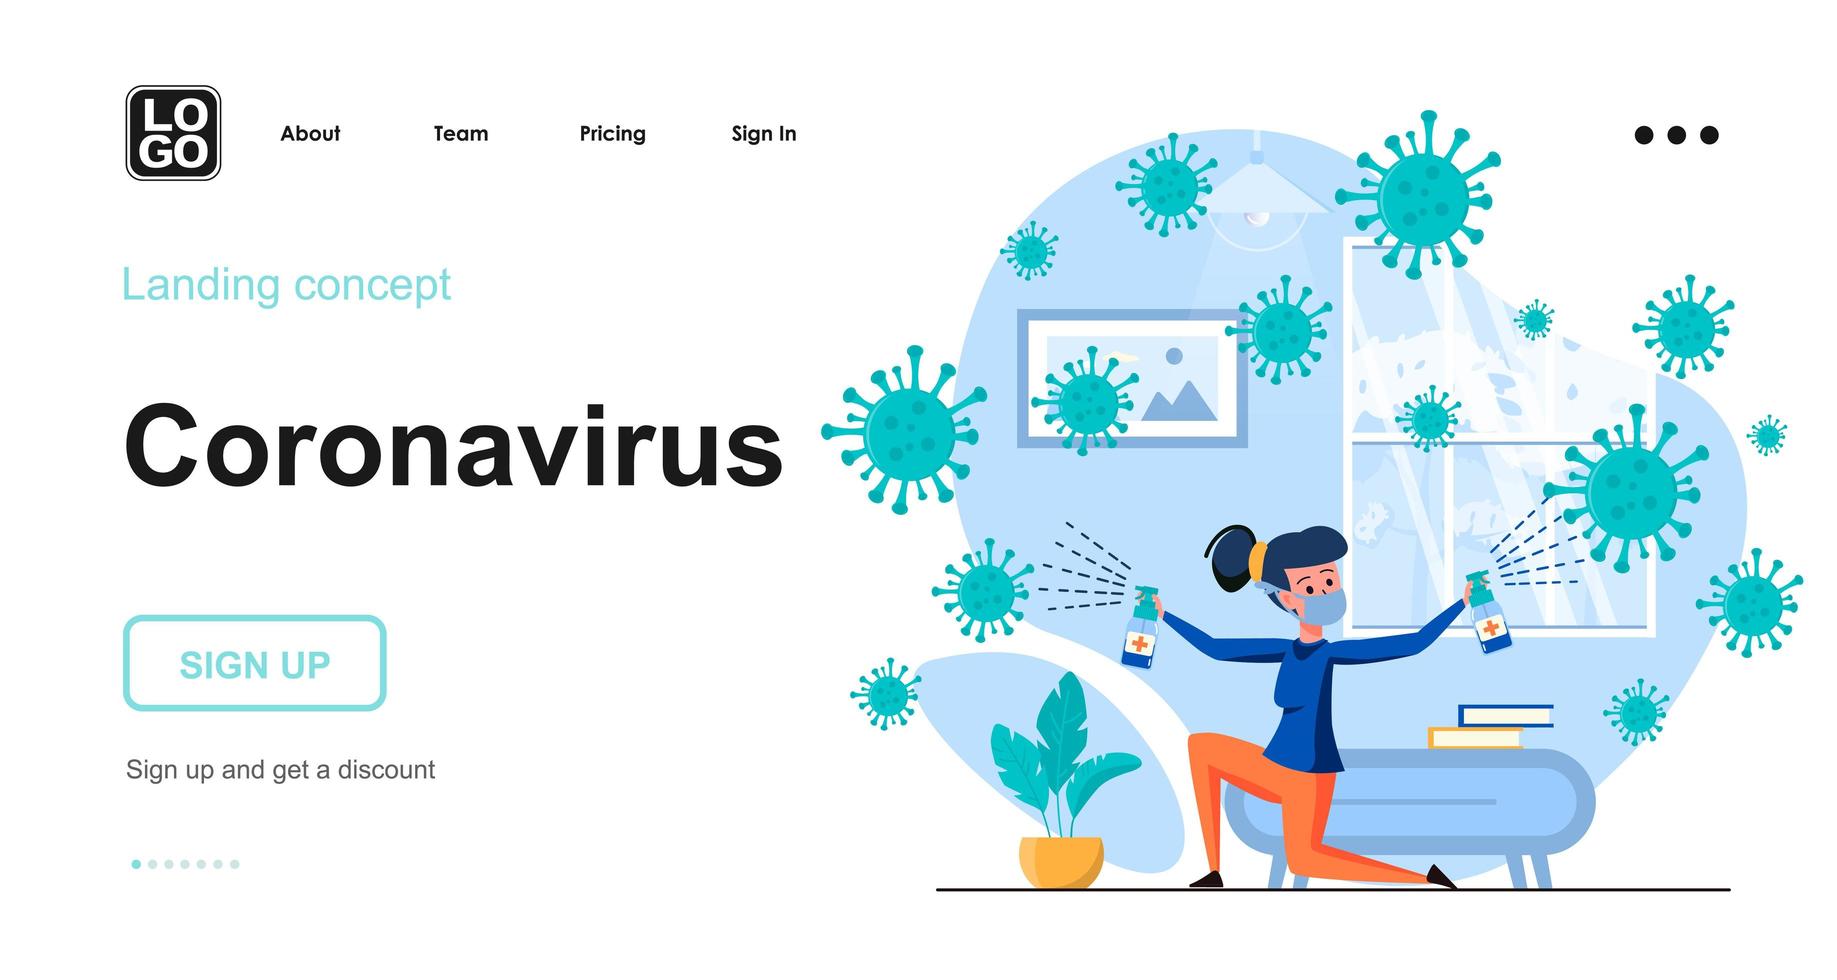 Coronavirus web concept vector